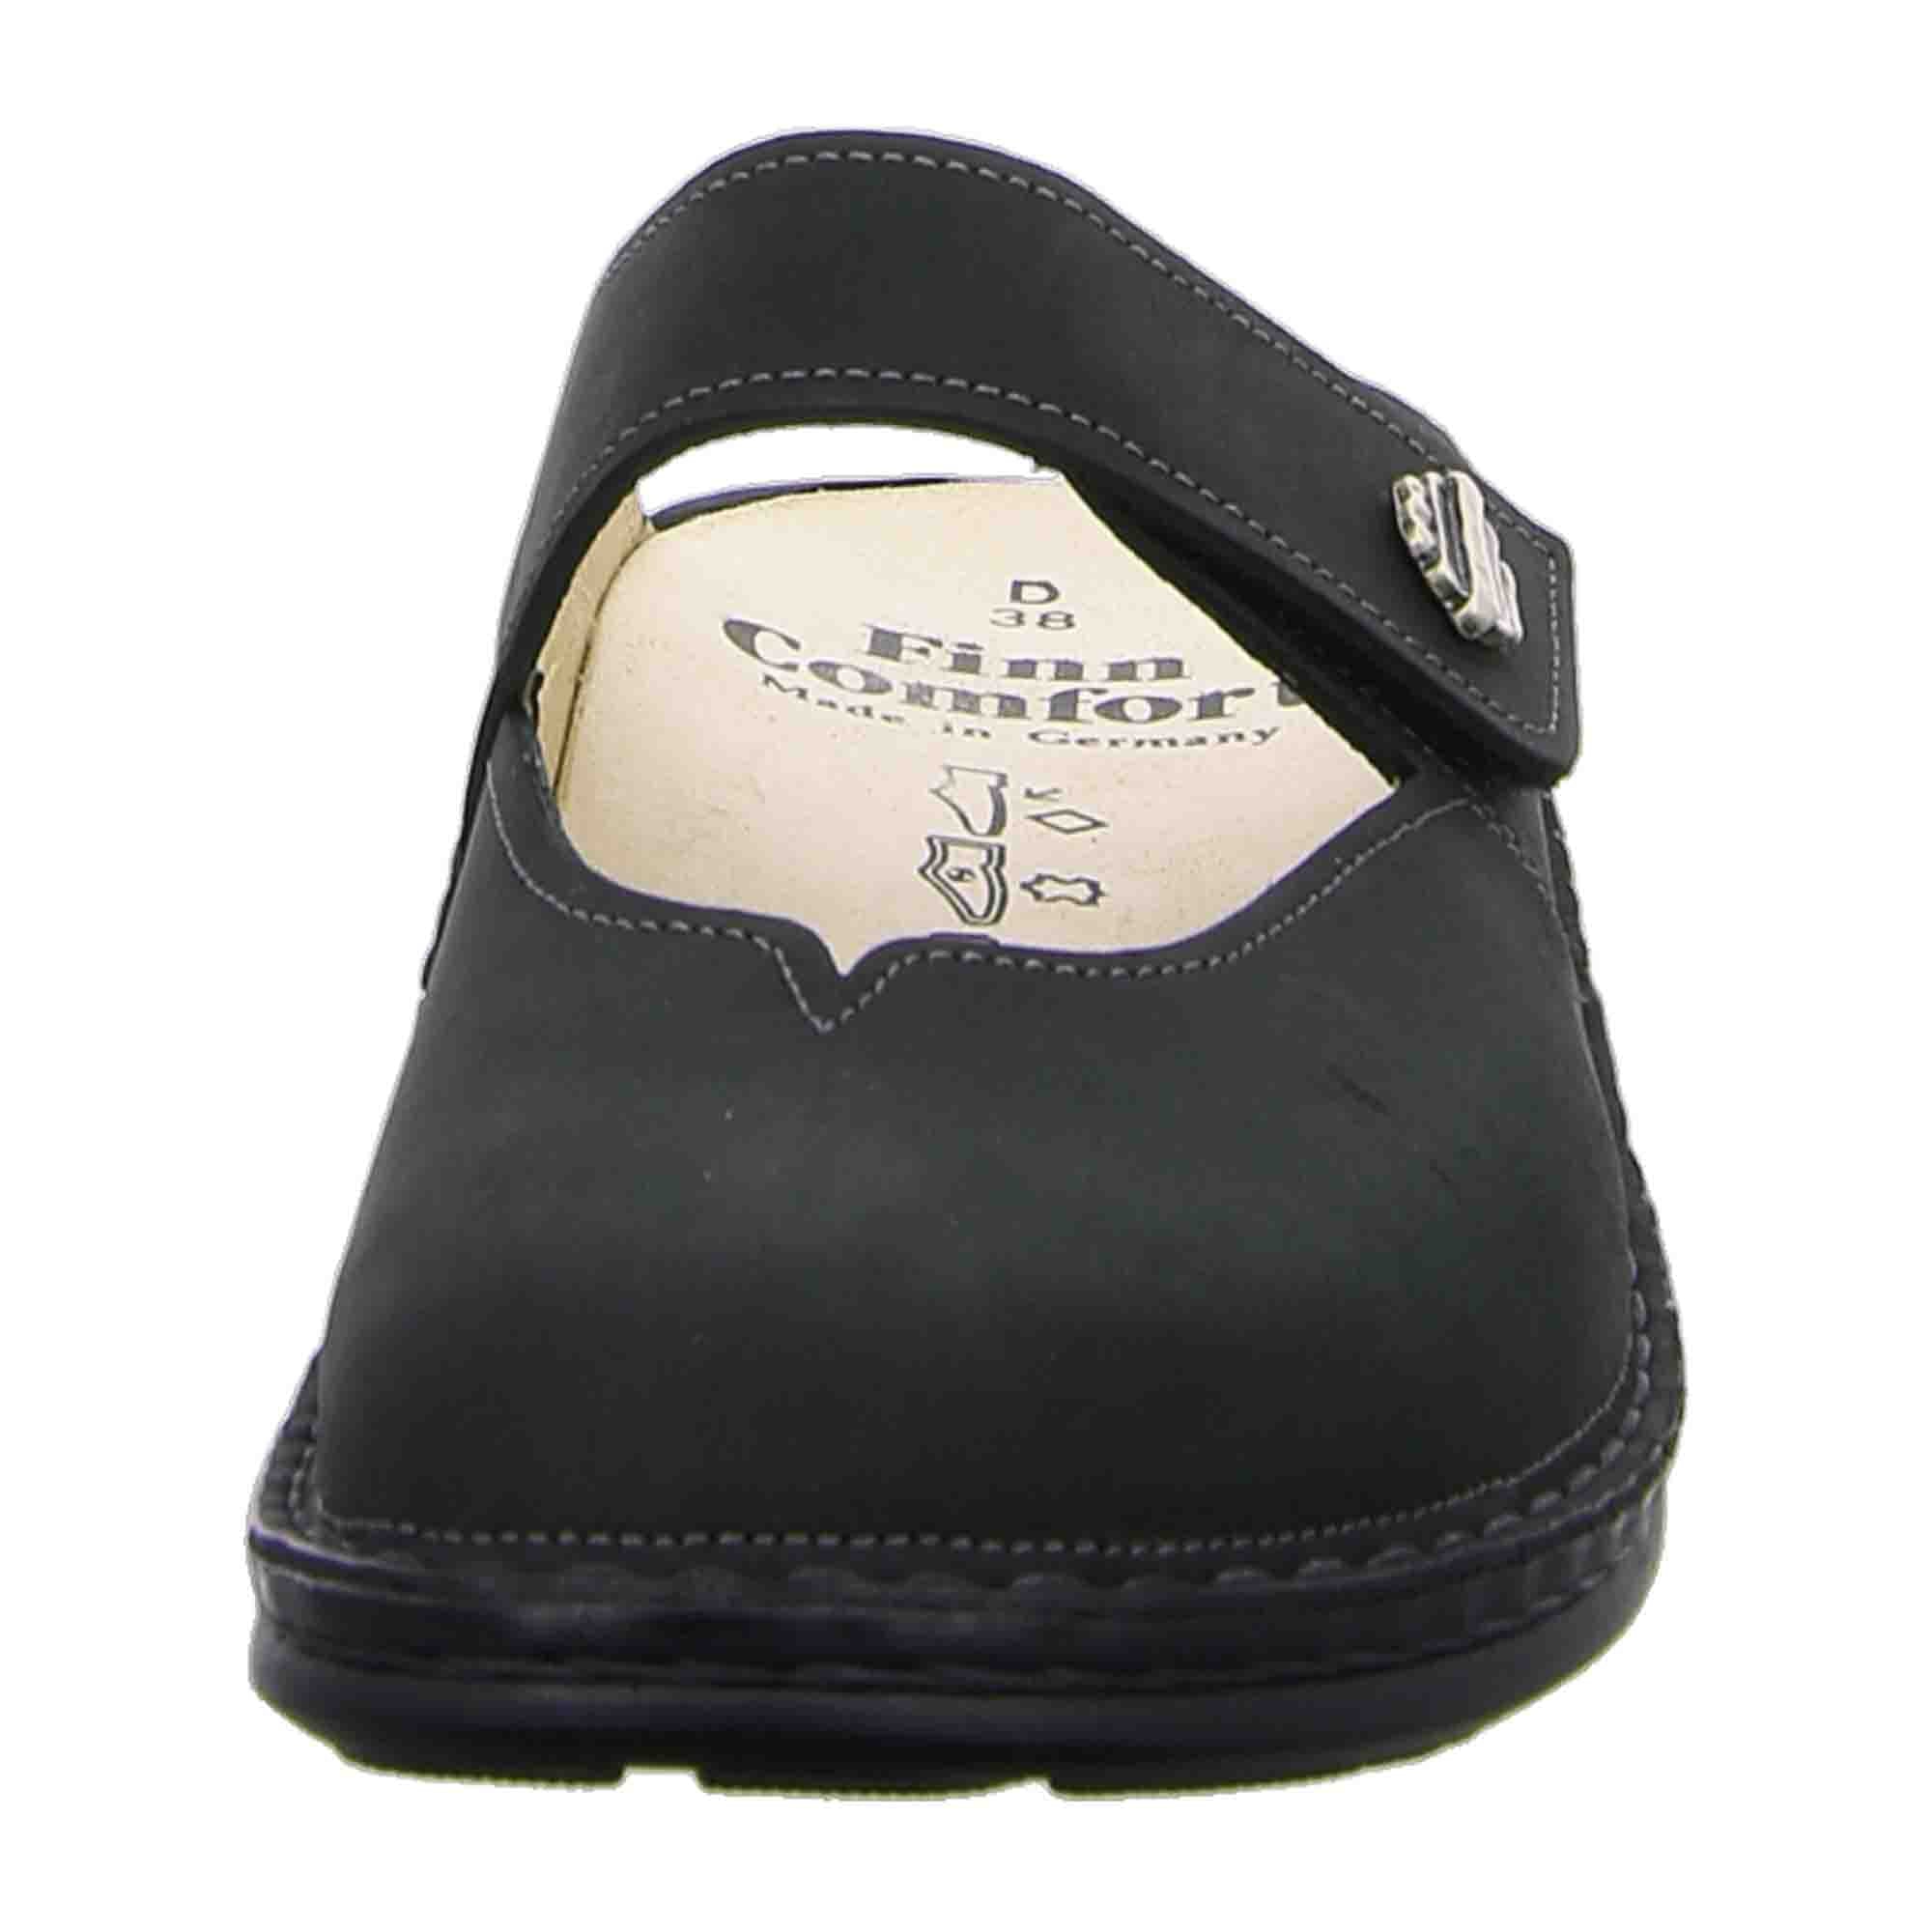 Finn Comfort Women's Sandals - Stylish & Comfortable Black Slides